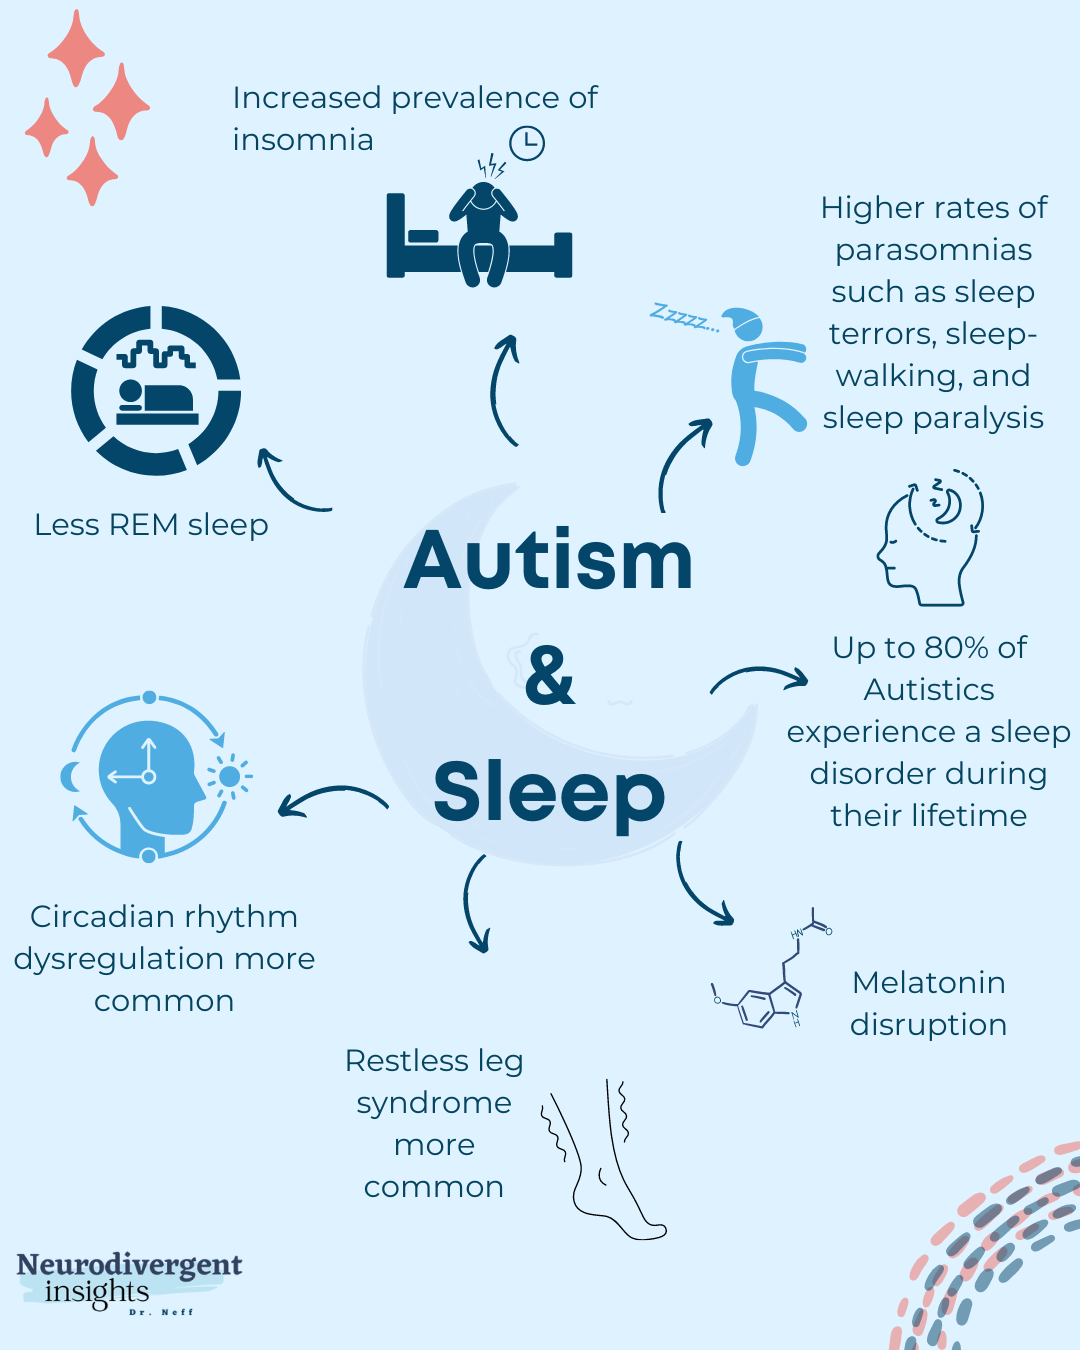 Do autistic people sleep a lot?